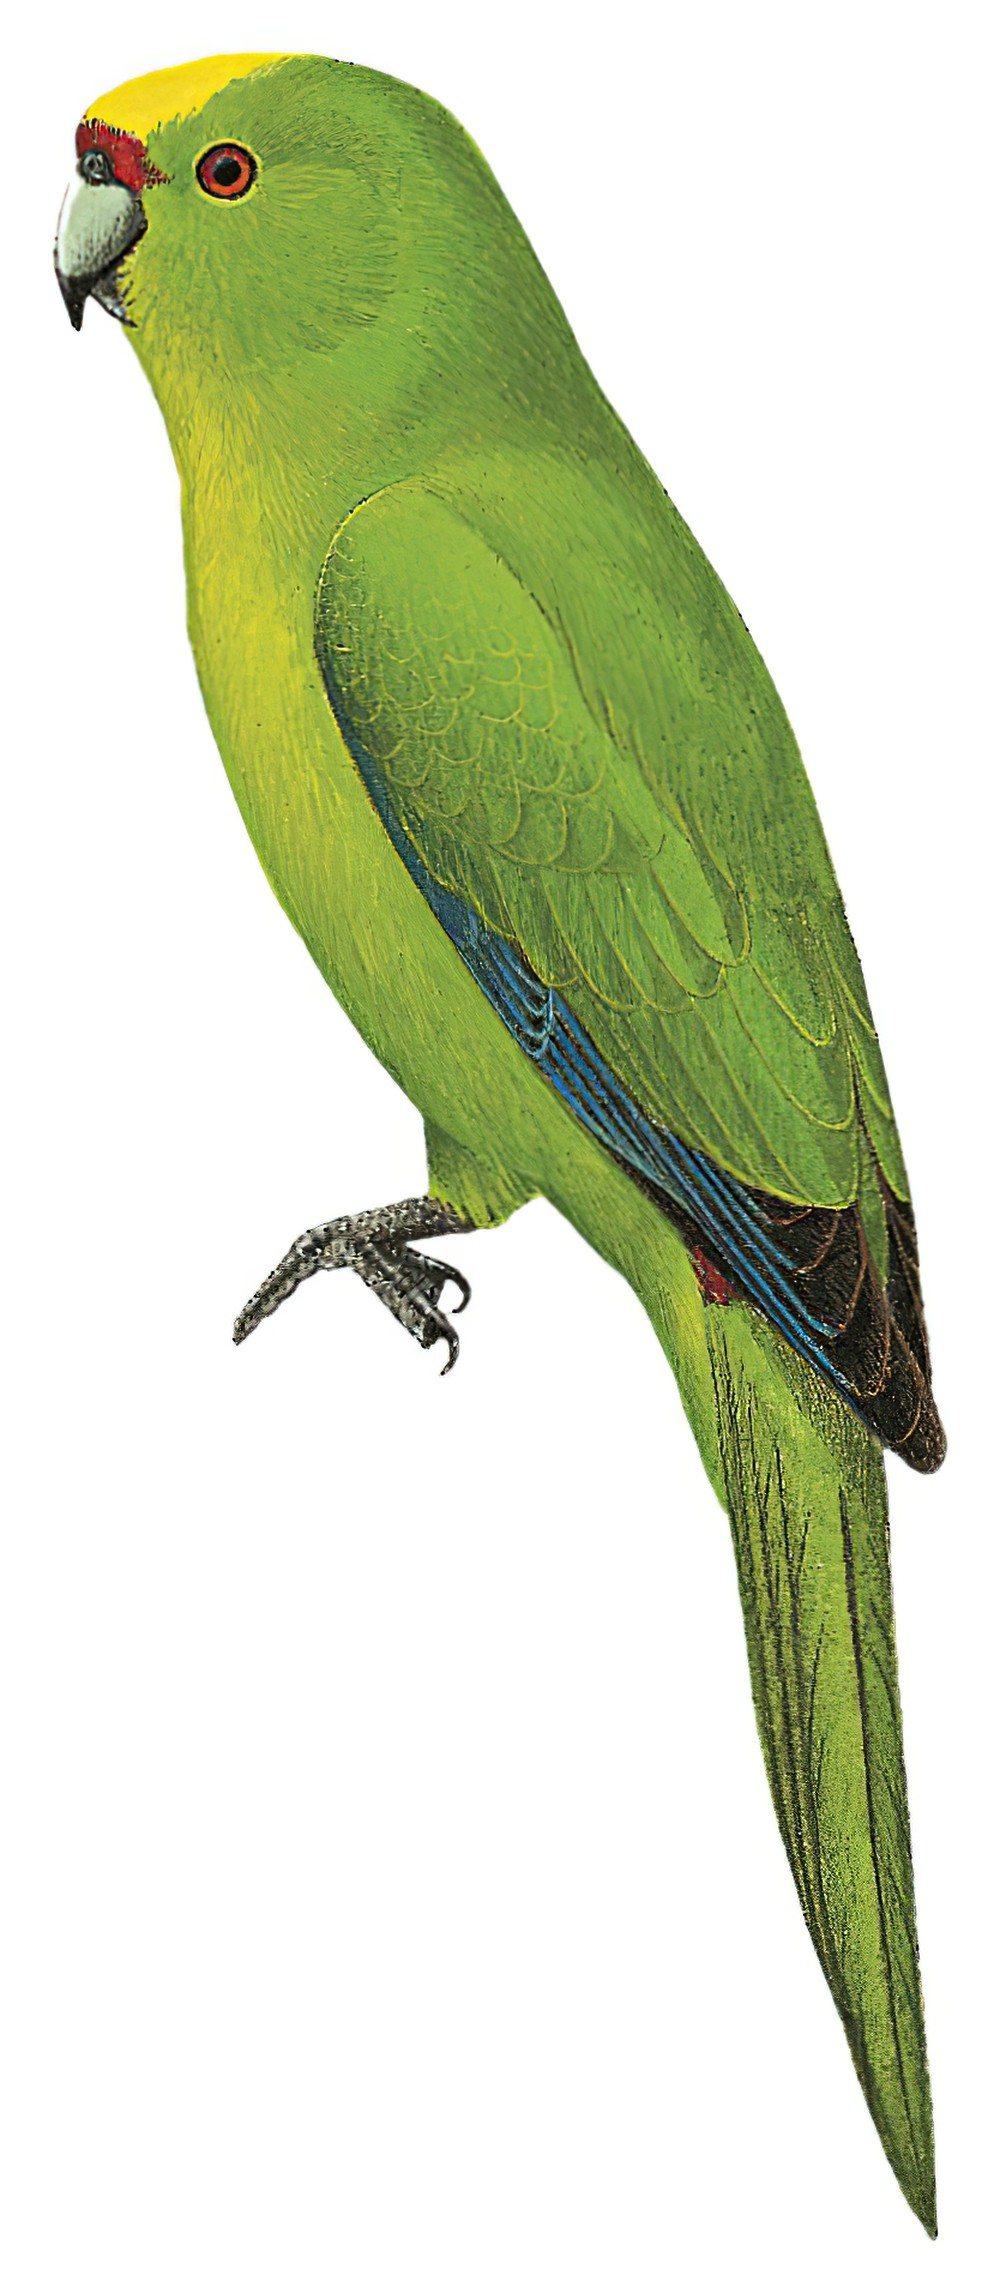 Chatham Islands Parakeet / Cyanoramphus forbesi